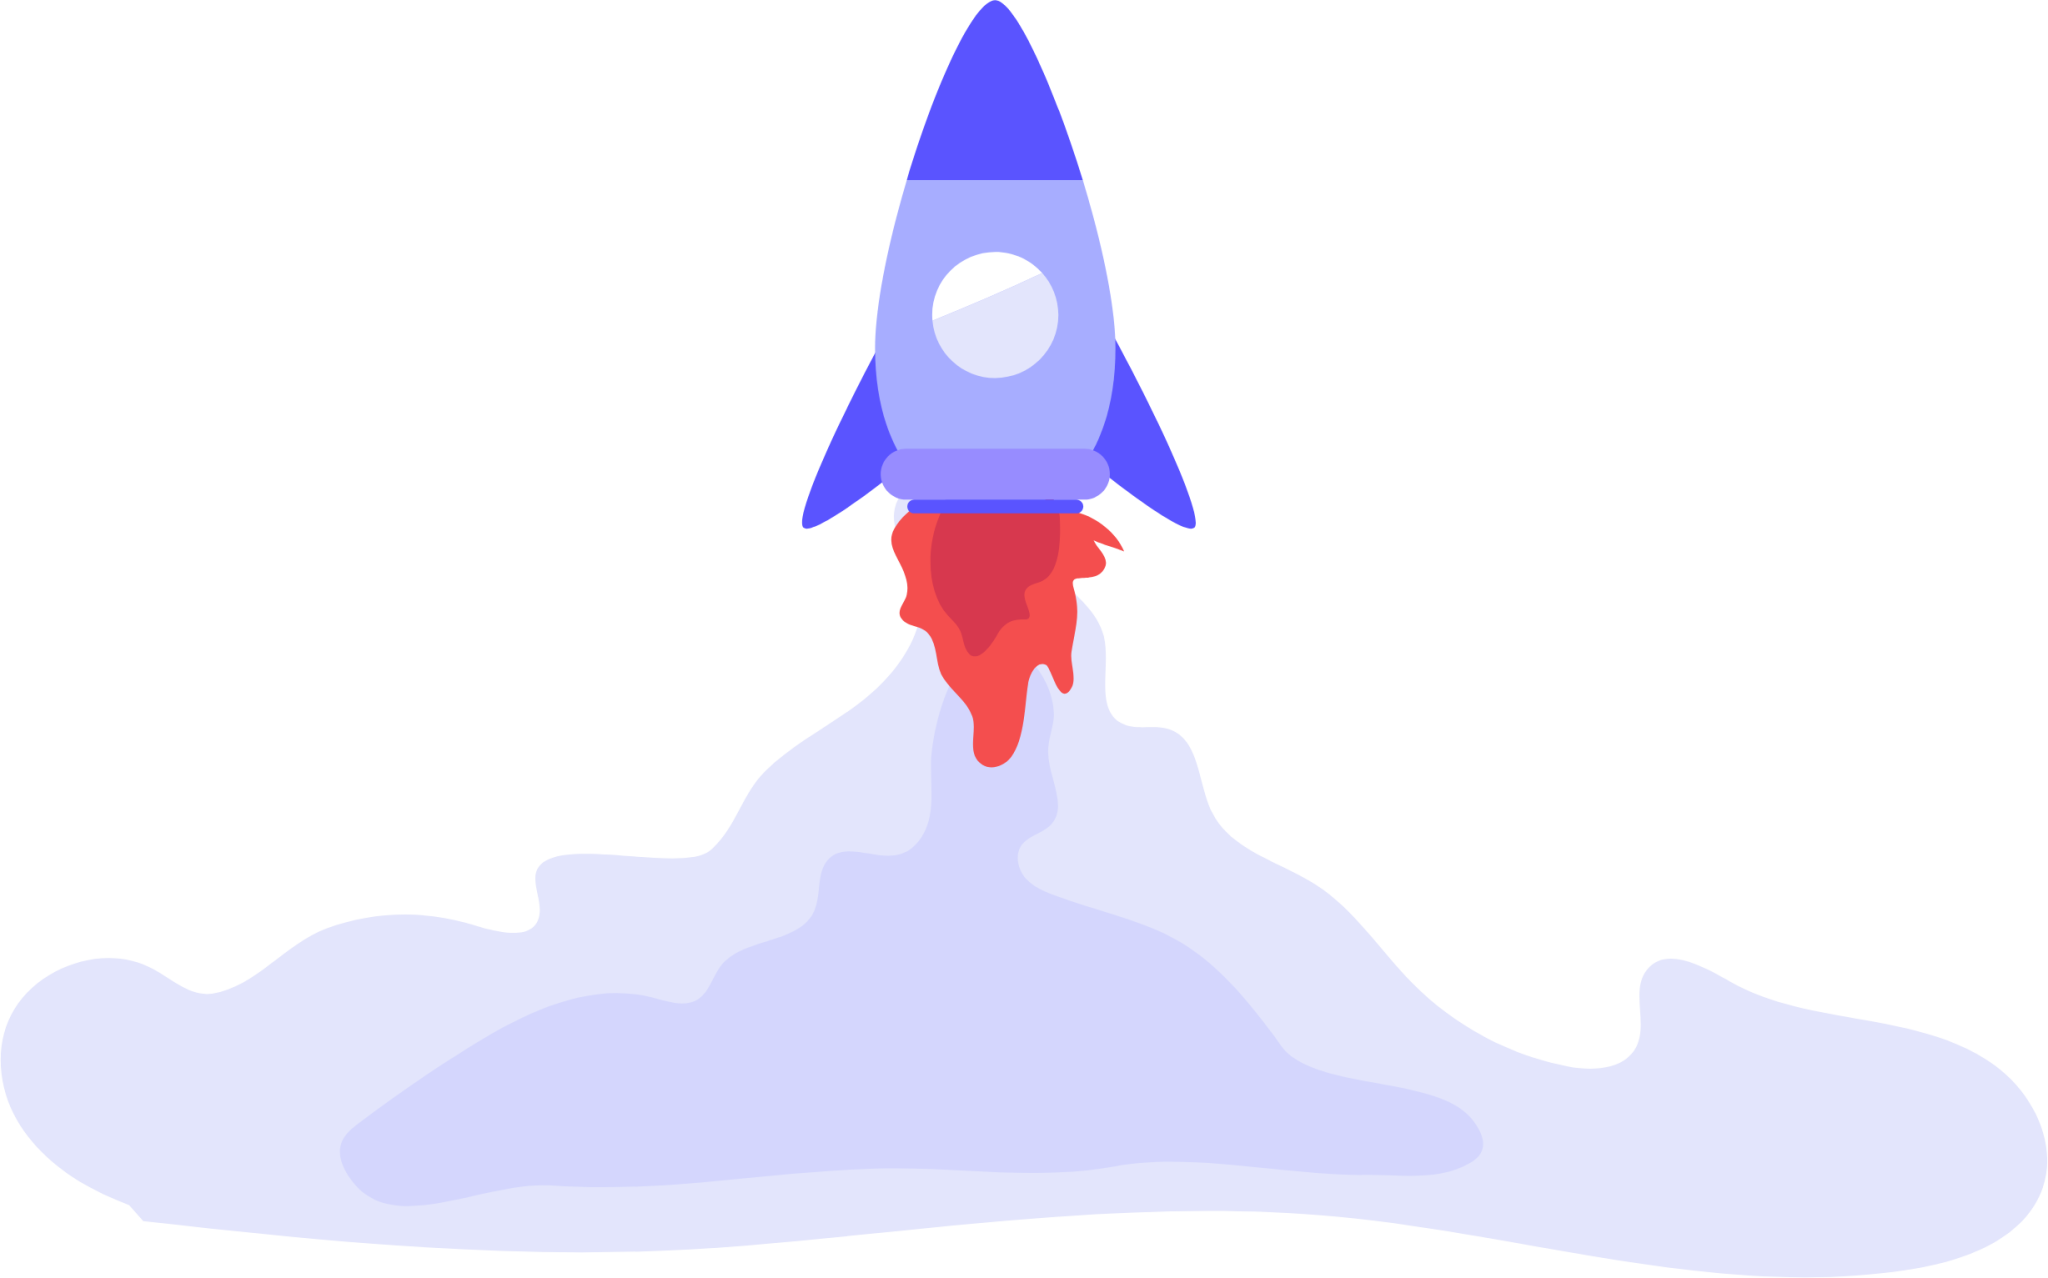 Startup launch illustration